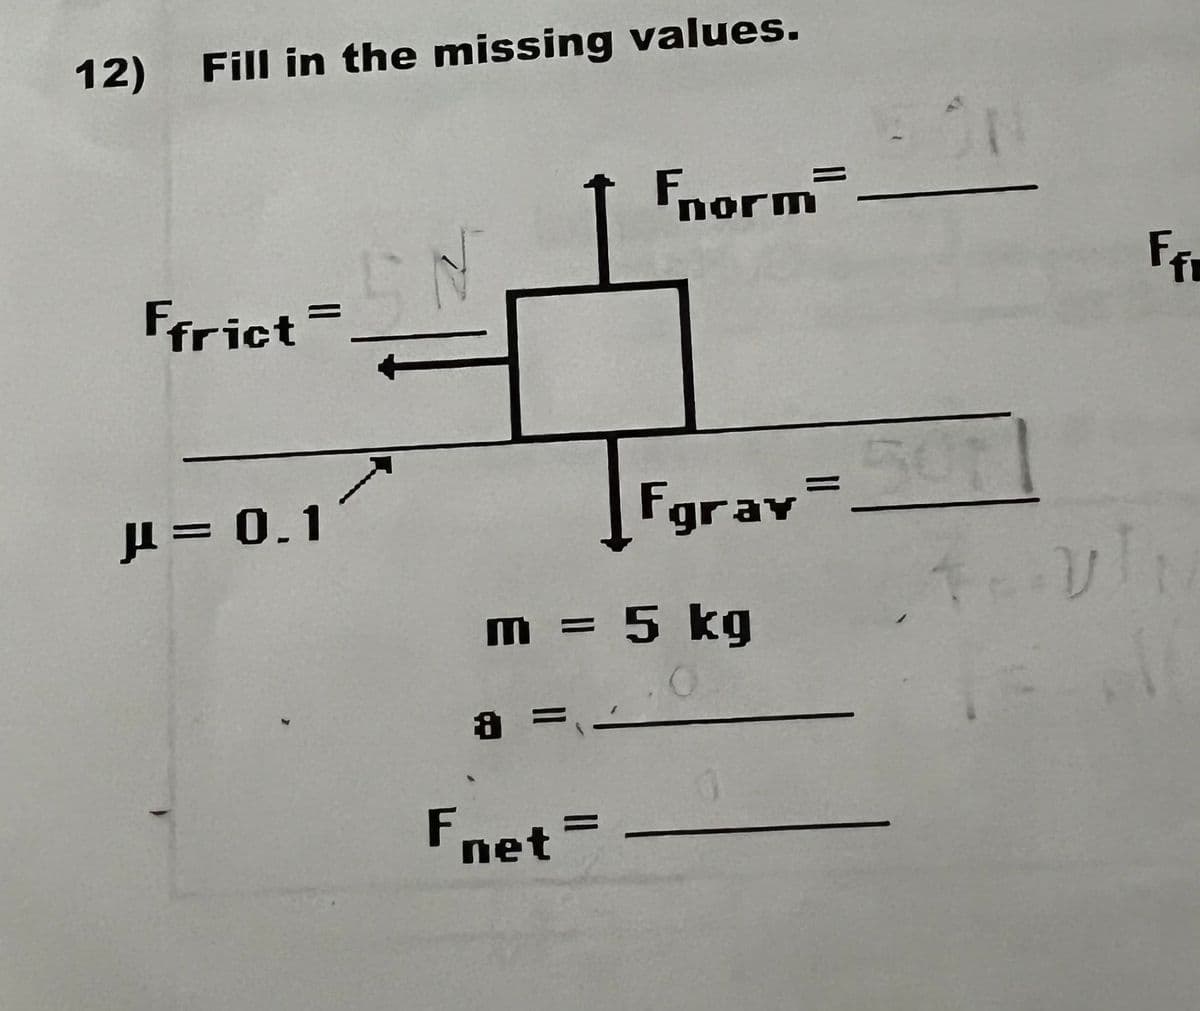 12) Fill in the missing values.
Ffrict=
μ = 0.1
8 =
m = 5 kg
Fnet
Fnorm
=
Fgrav
11
...v
Ffr